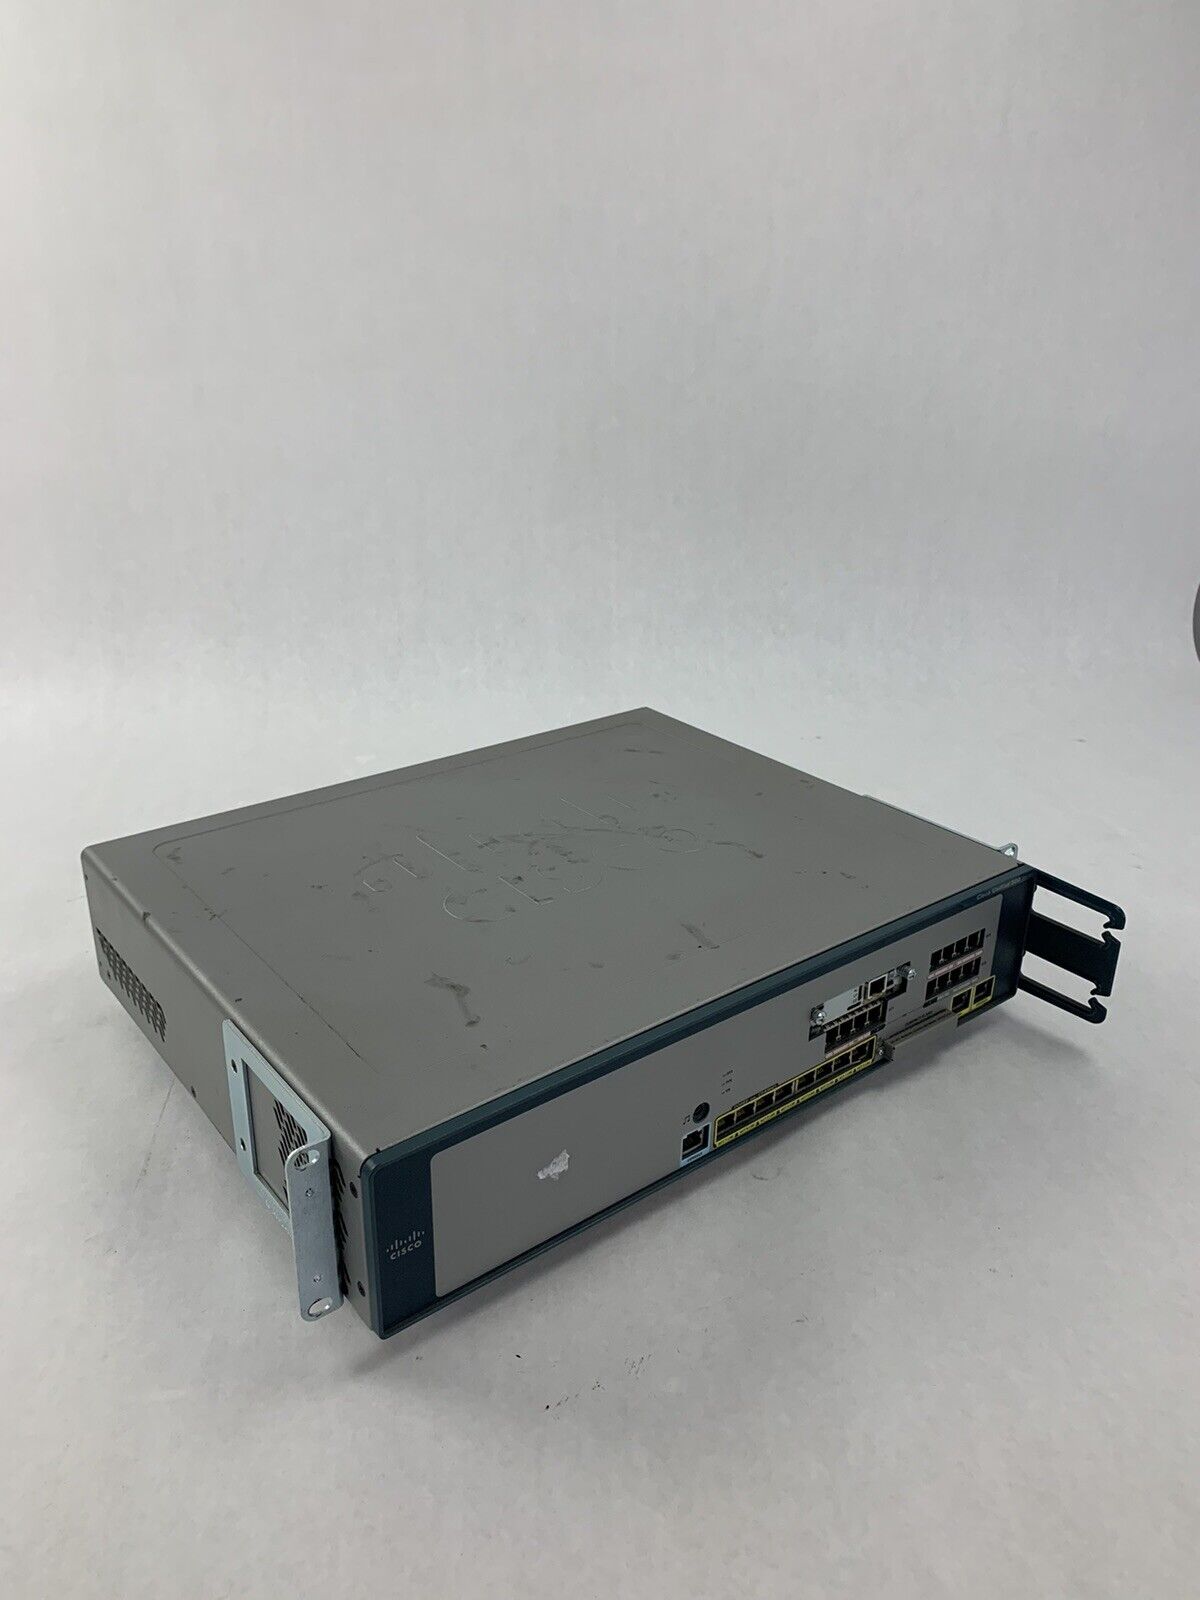 Cisco Unified 500 Series Router UC520-24U-8FXO-K9 No Compact Flash